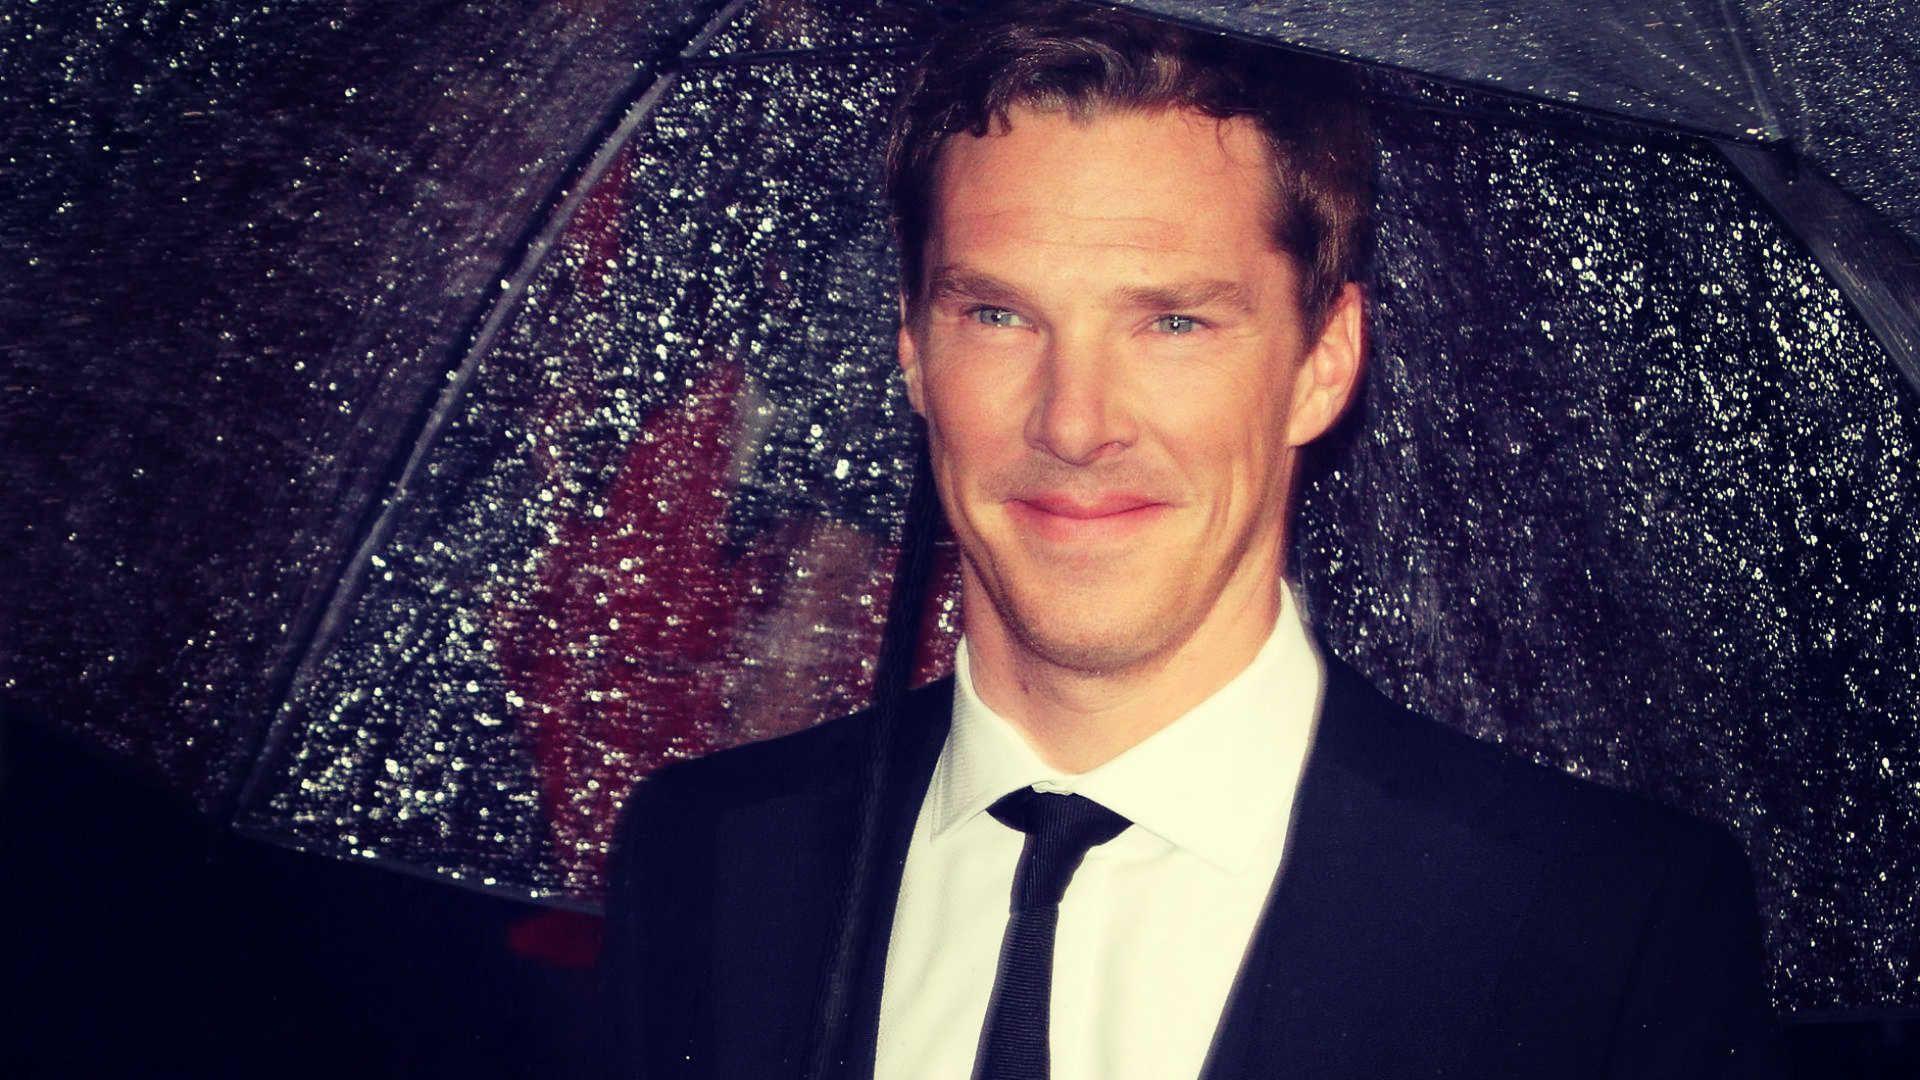 Benedict Cumberbatch Image Search Results. BC Sherlock